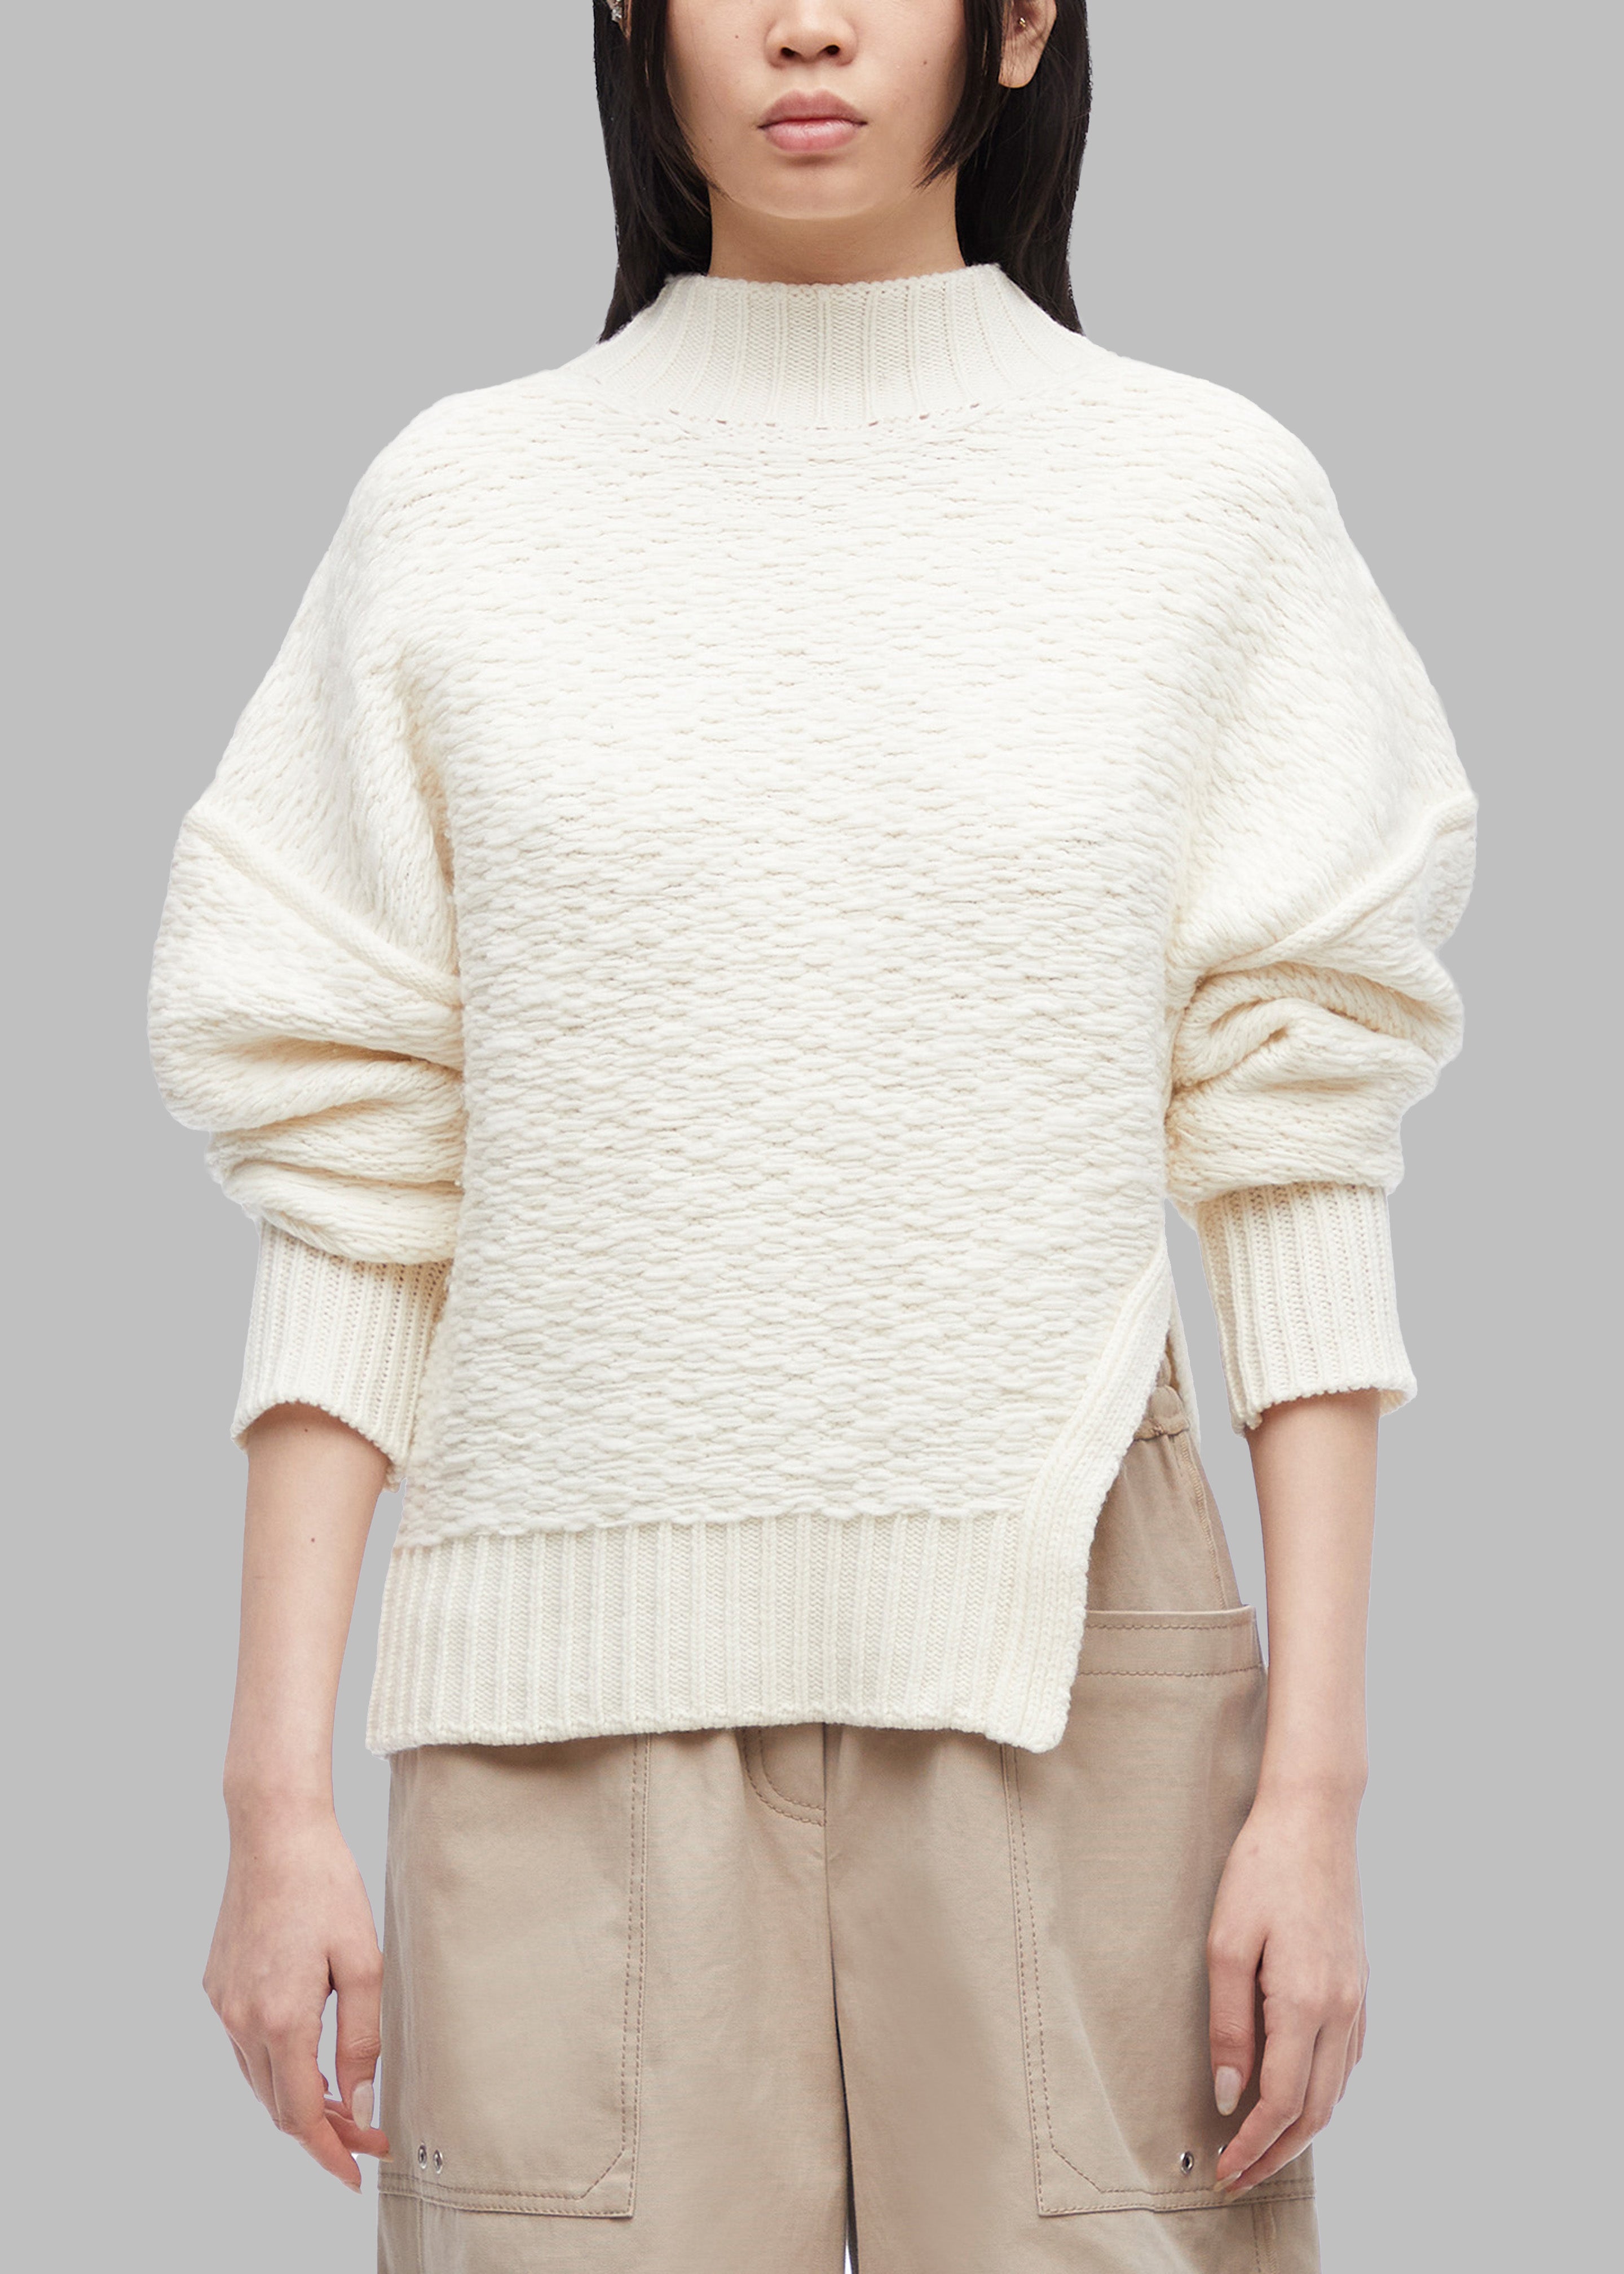 3.1 Phillip Lim Wool Jacquard Turtleneck Sweater - Ivory - 2